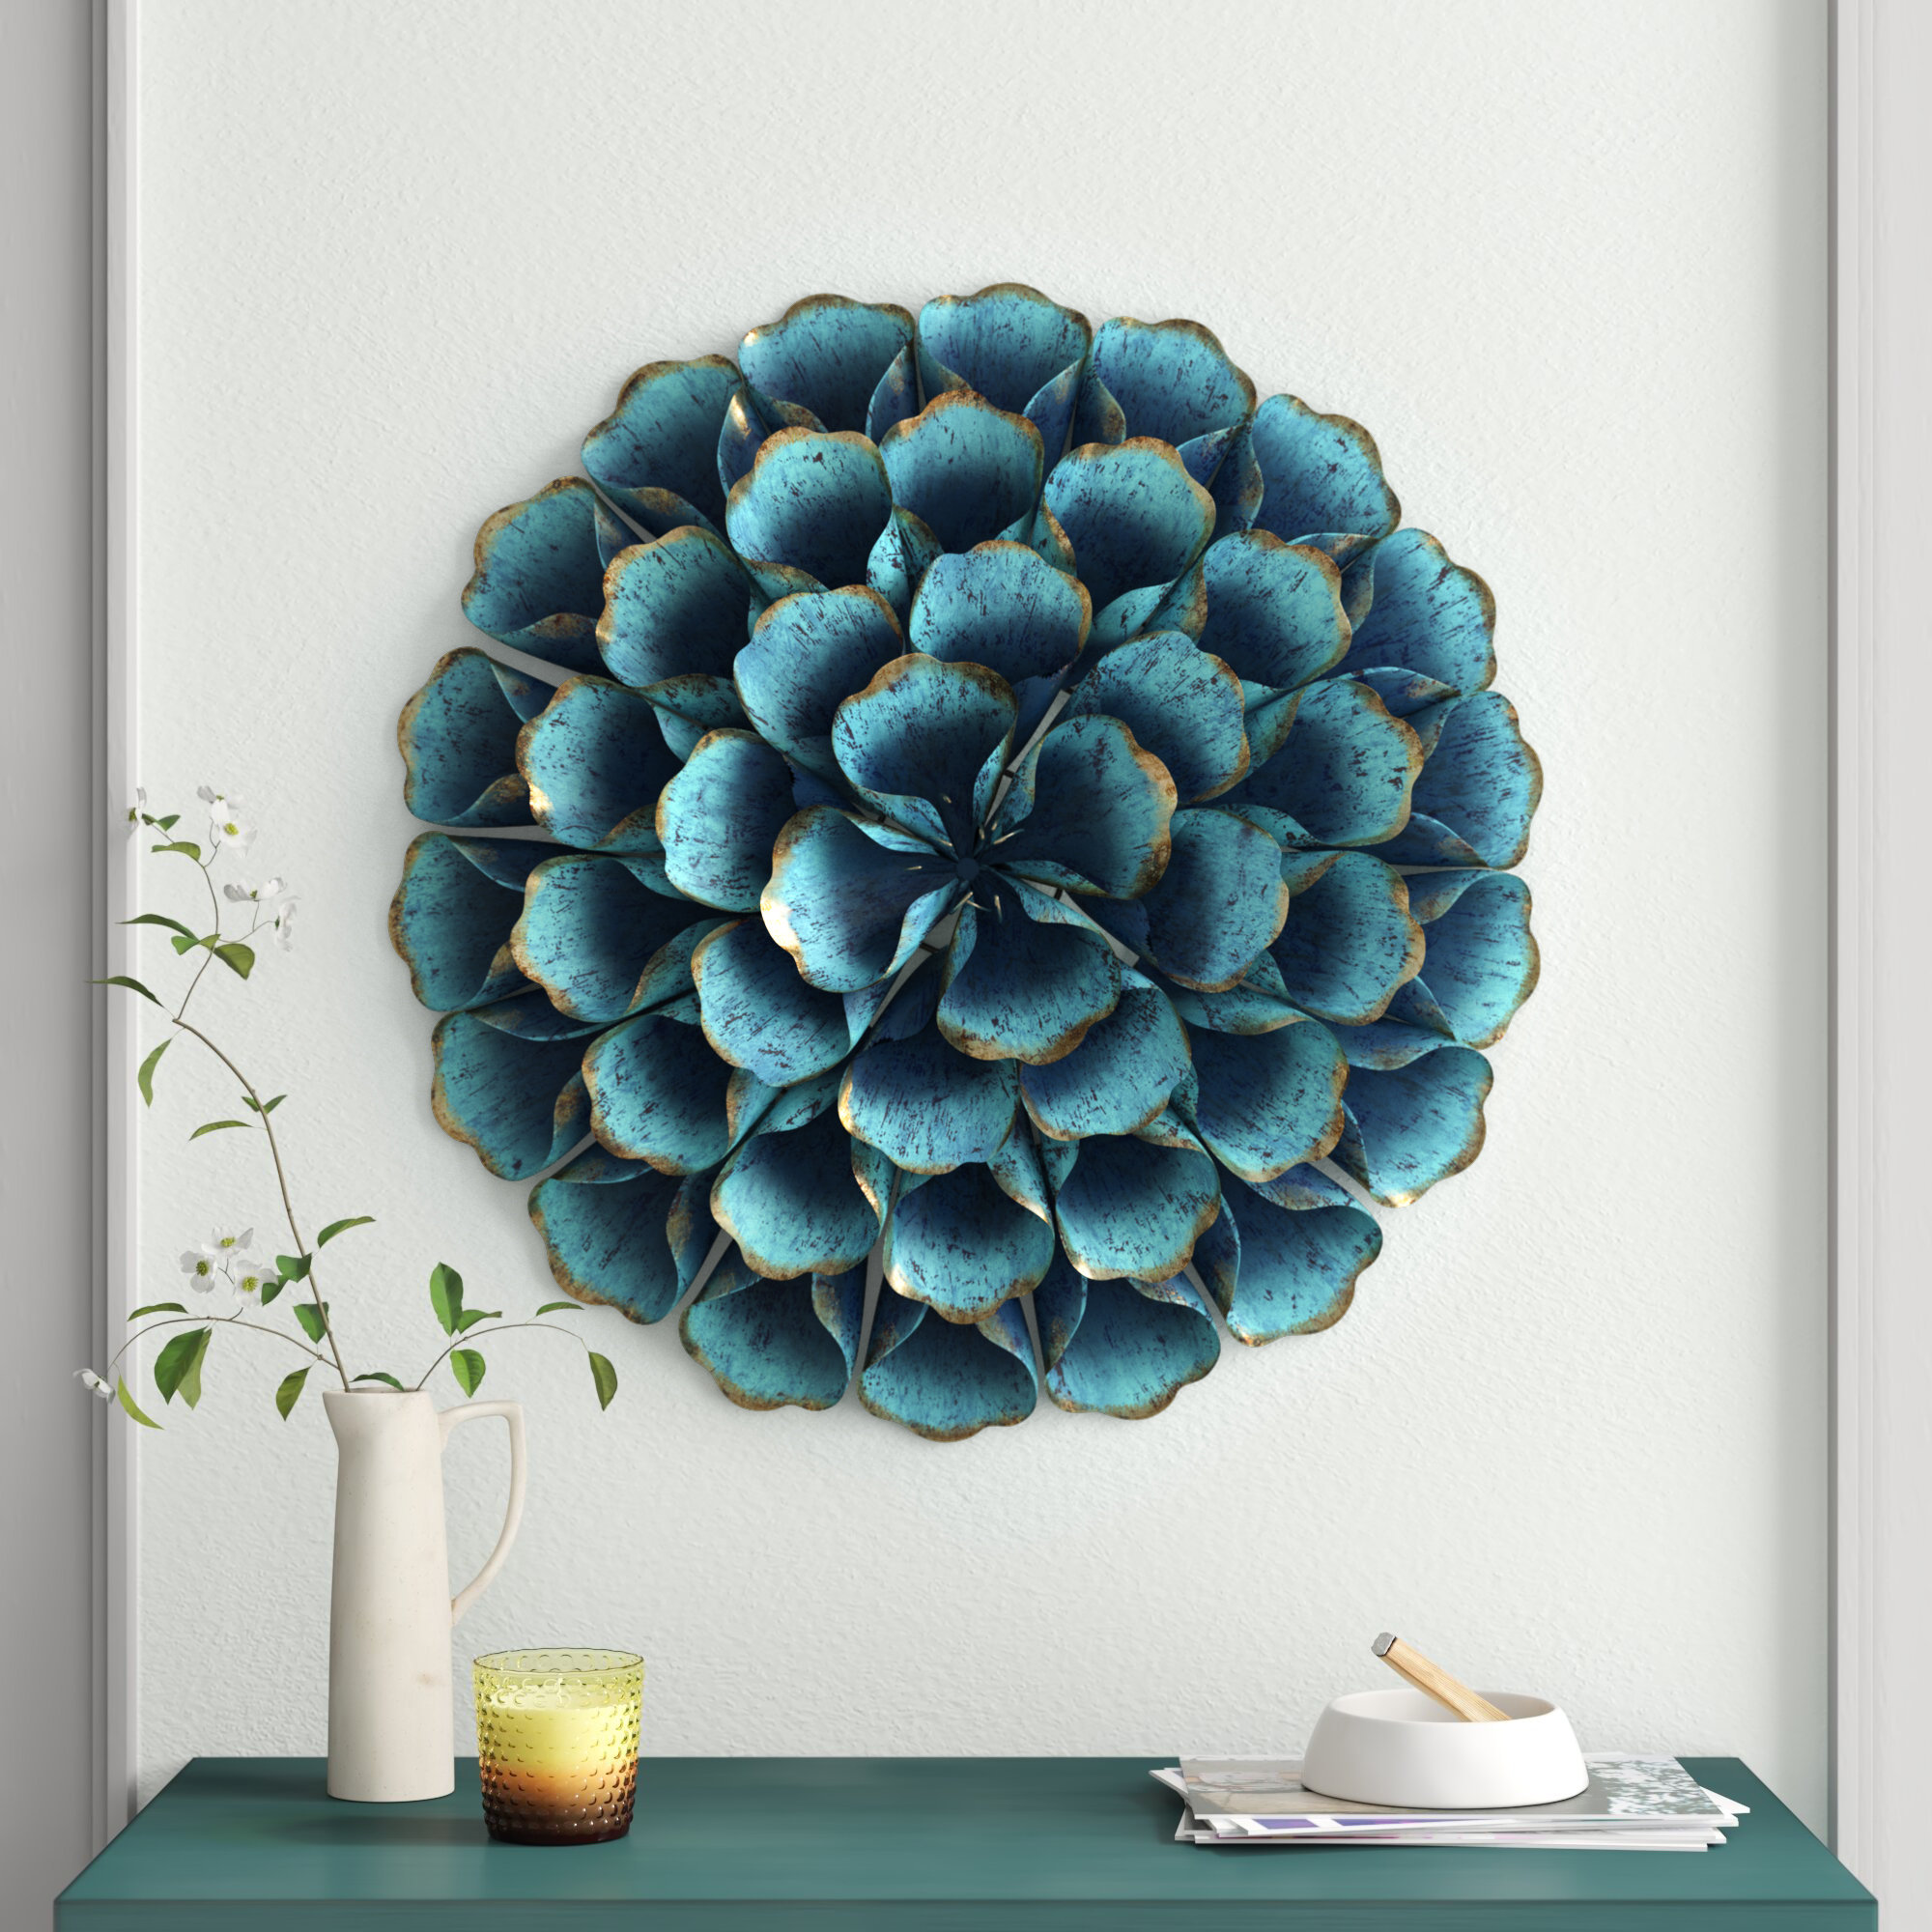 Mistana™ Handmade Metal Plants  Flowers Wall Decor  Reviews Wayfair